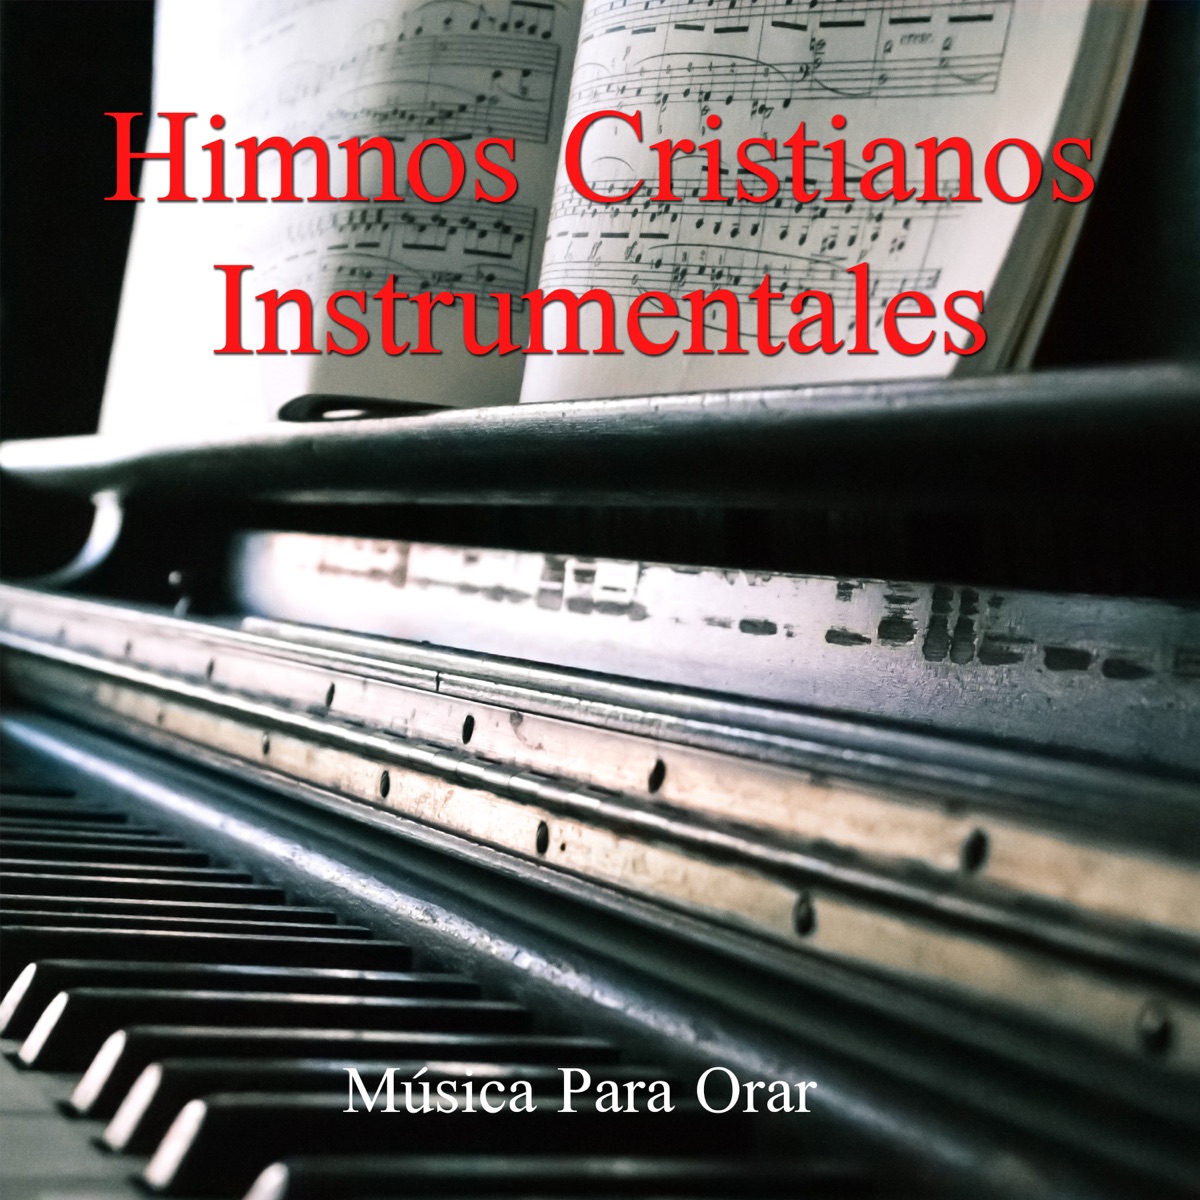 Himnos cristianos (Instrumental) - Album by musica para orar - Apple Music